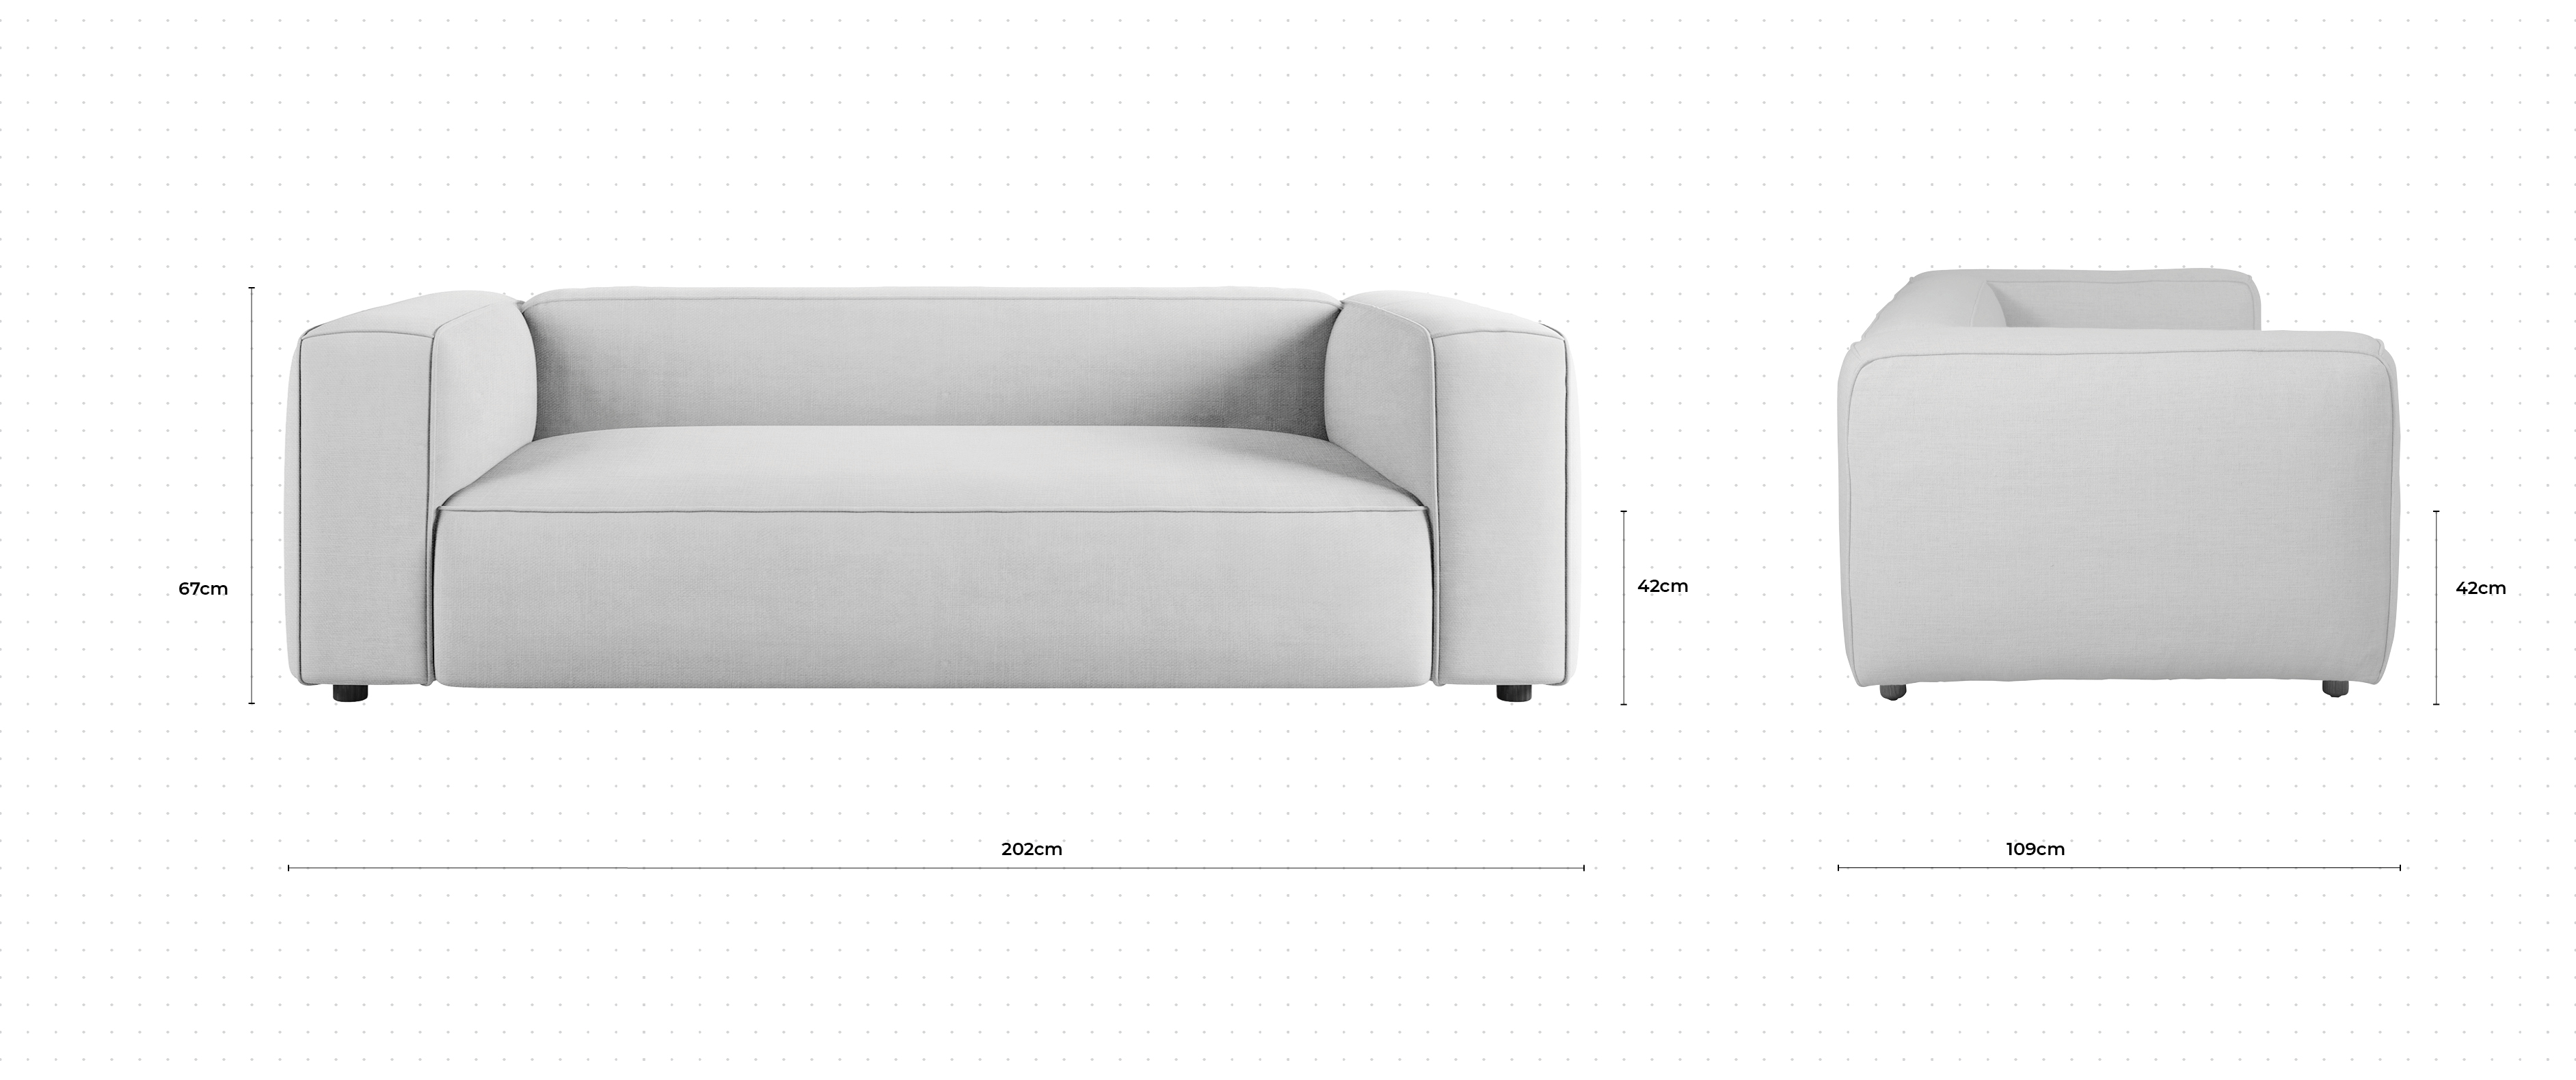 Hogarth 2 Seater Sofa dimensions